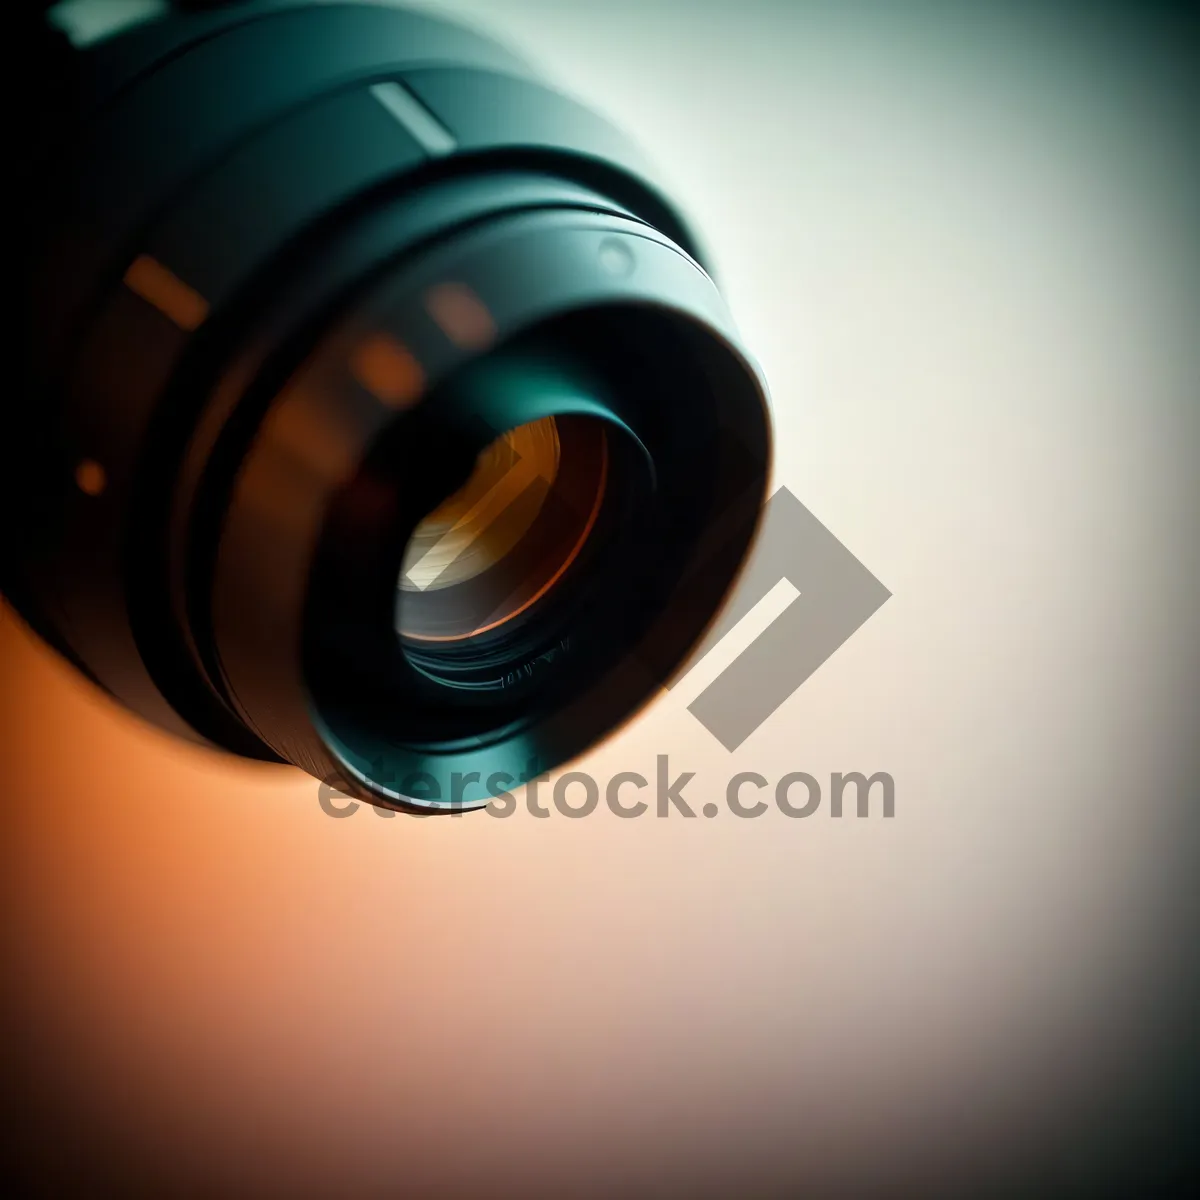 Picture of Digital Camera Lens Control Mechanism